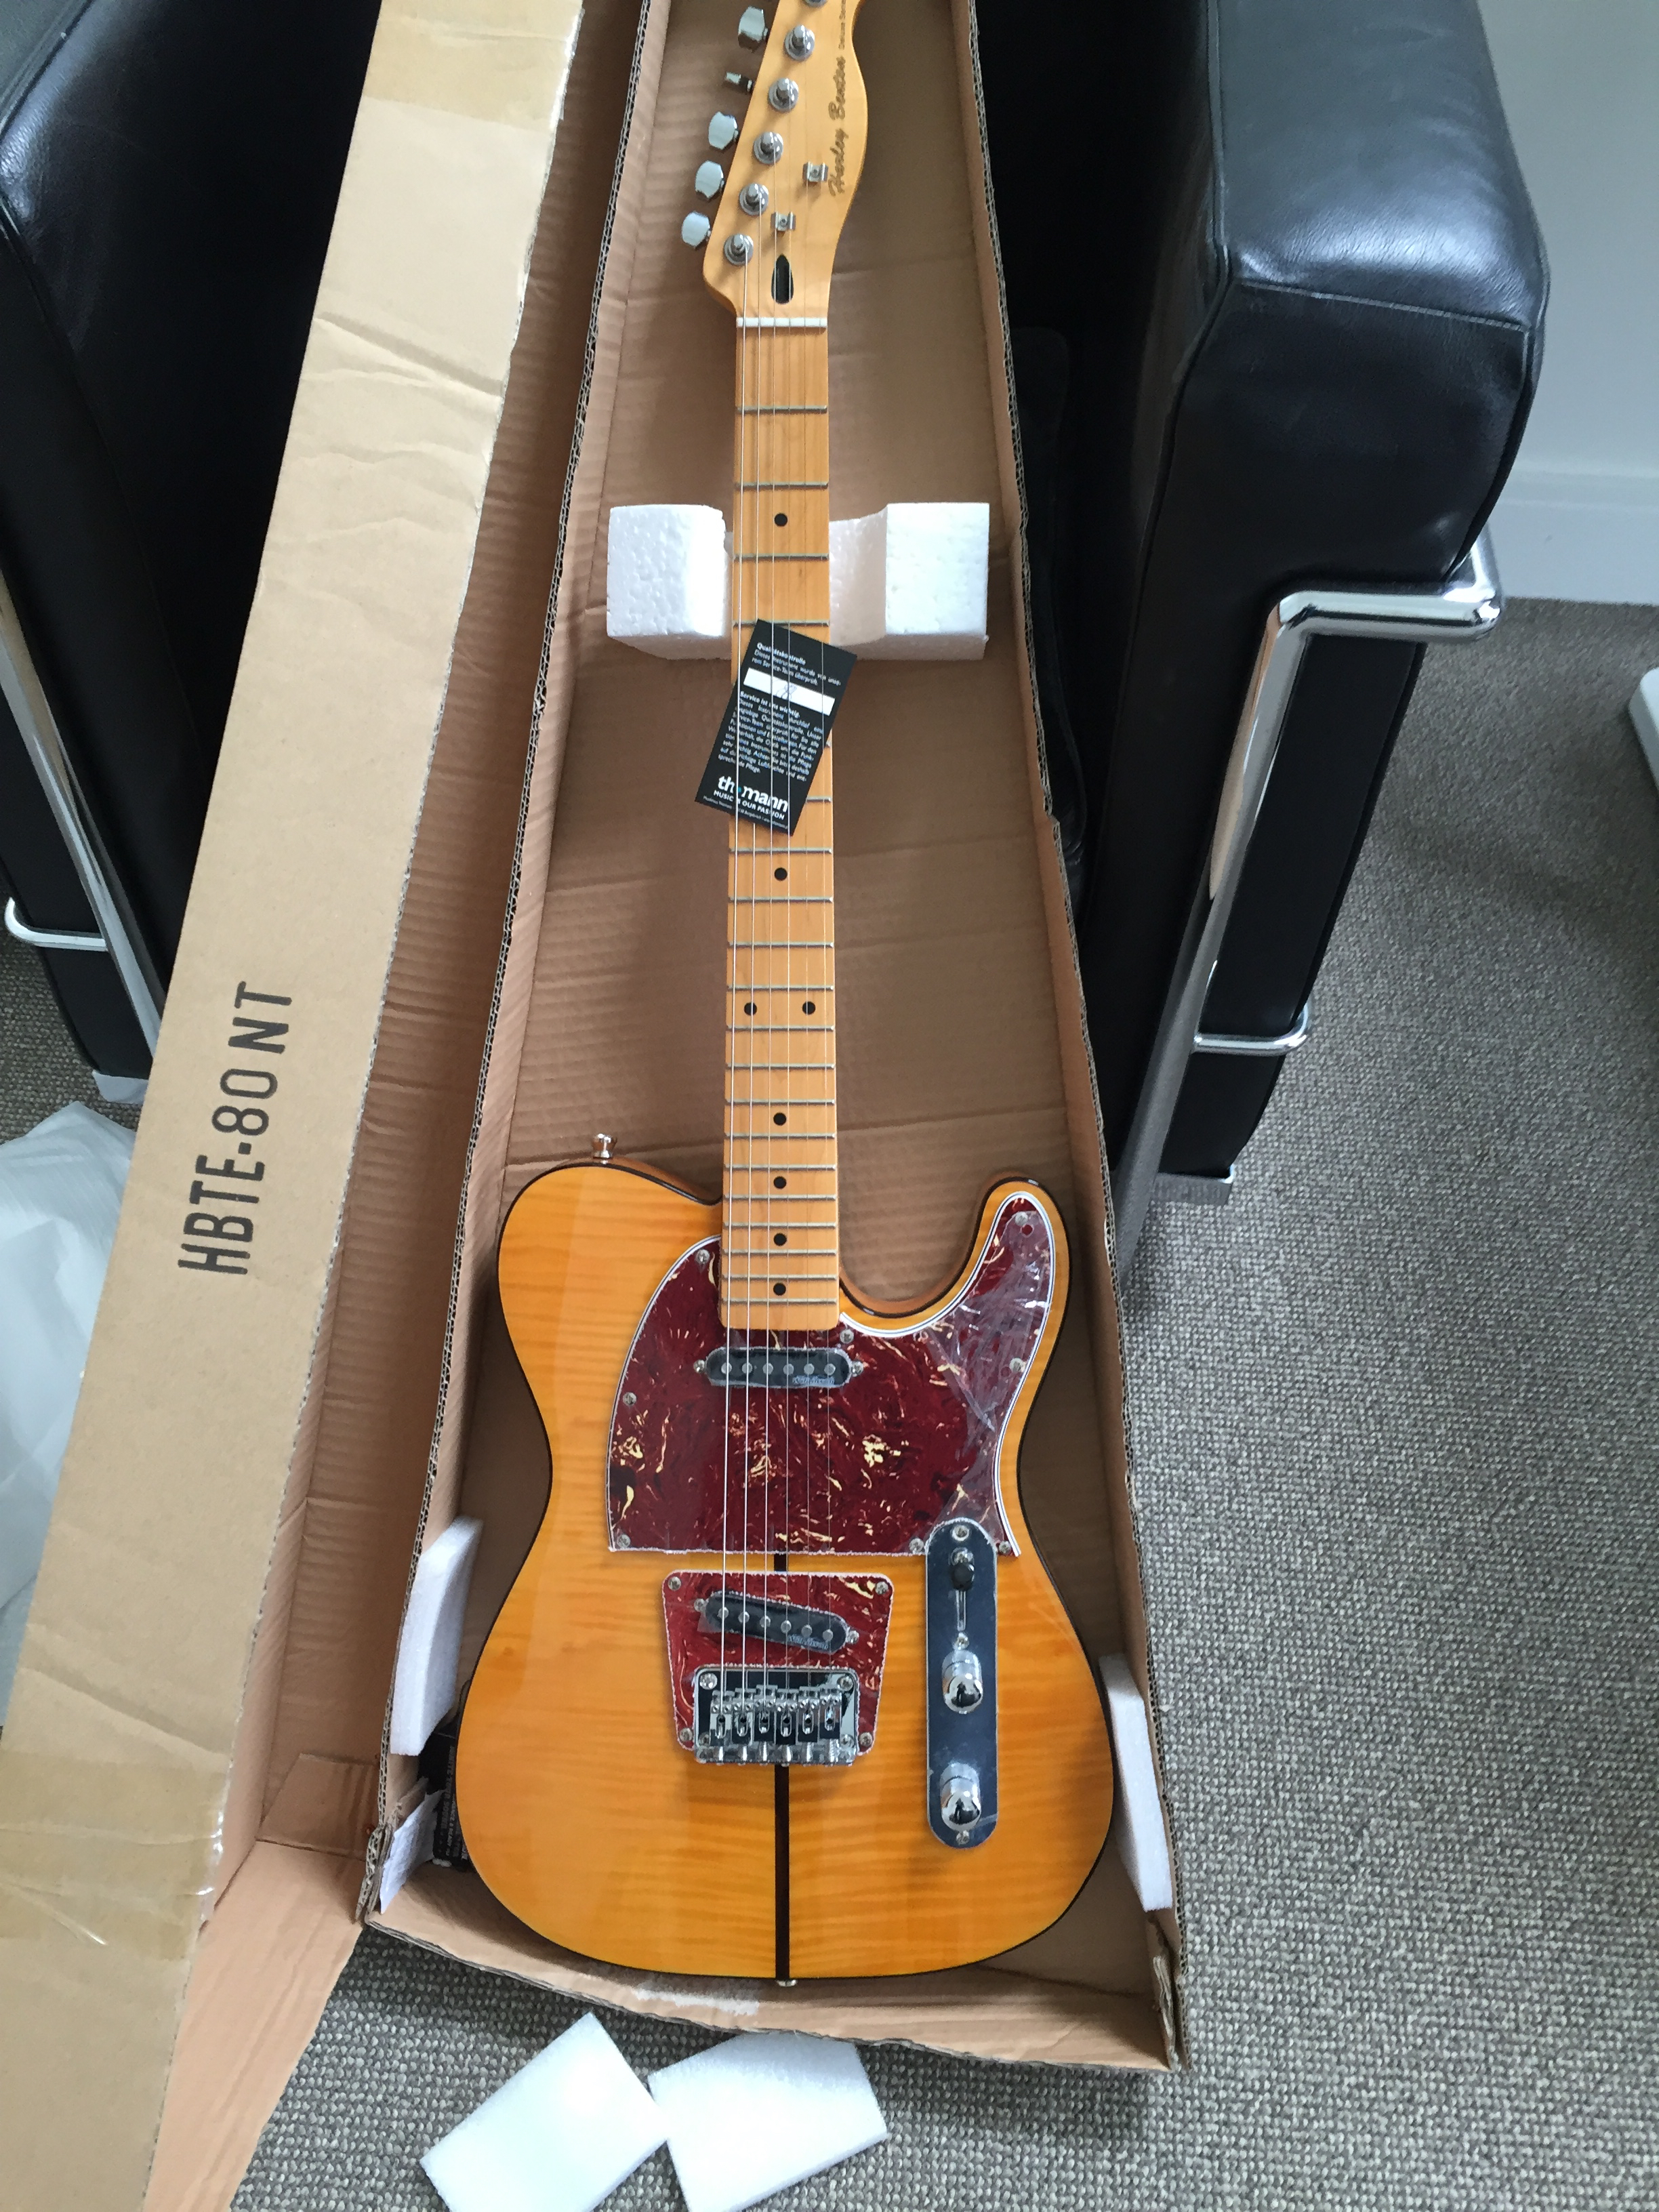 New Guitar! Harley Benton TE-80 Prince Telecaster replica. – Ed's